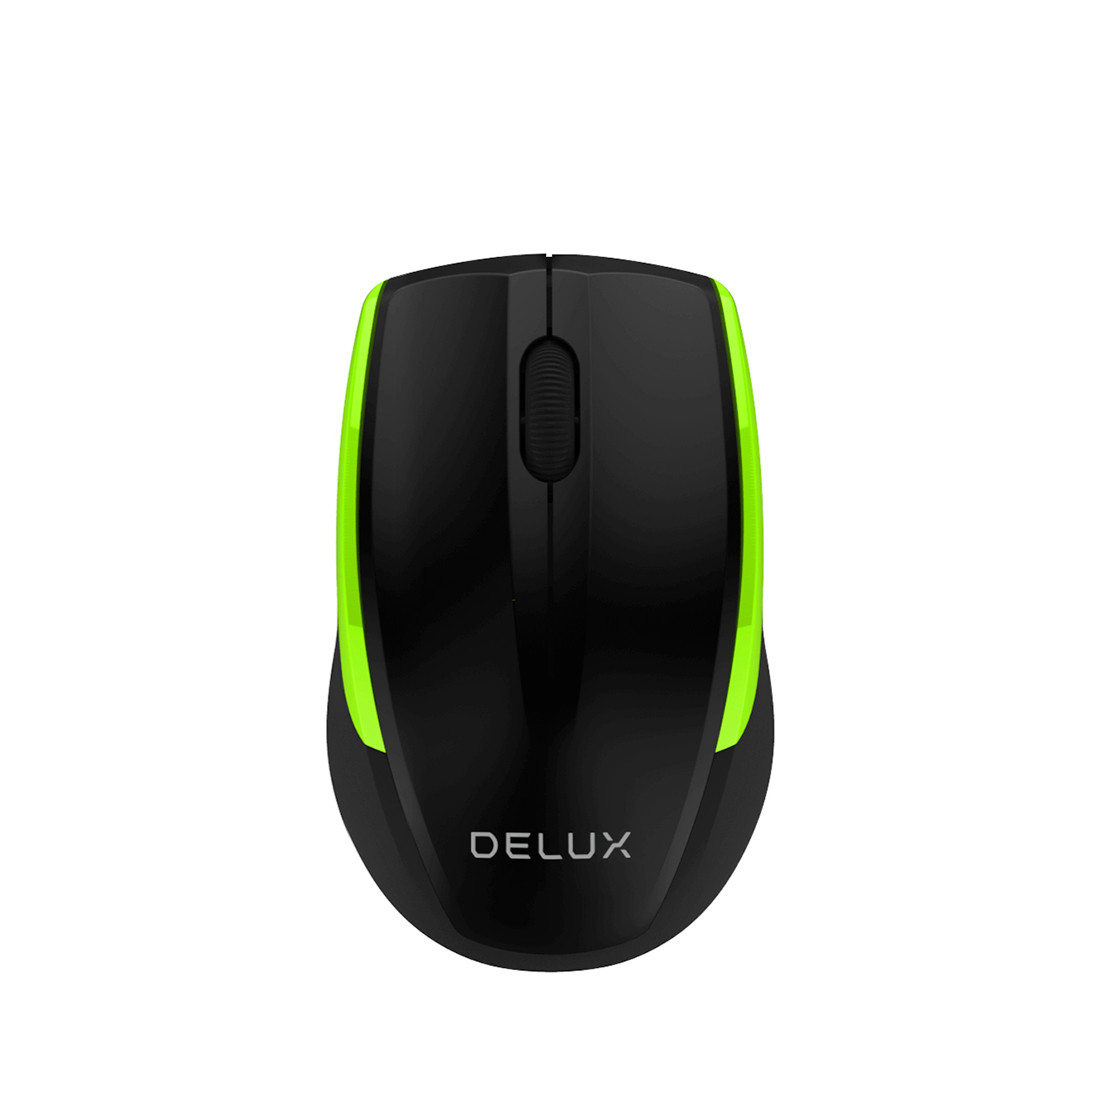 Компьютерная мышь Delux DLM-321OGB, фото 1